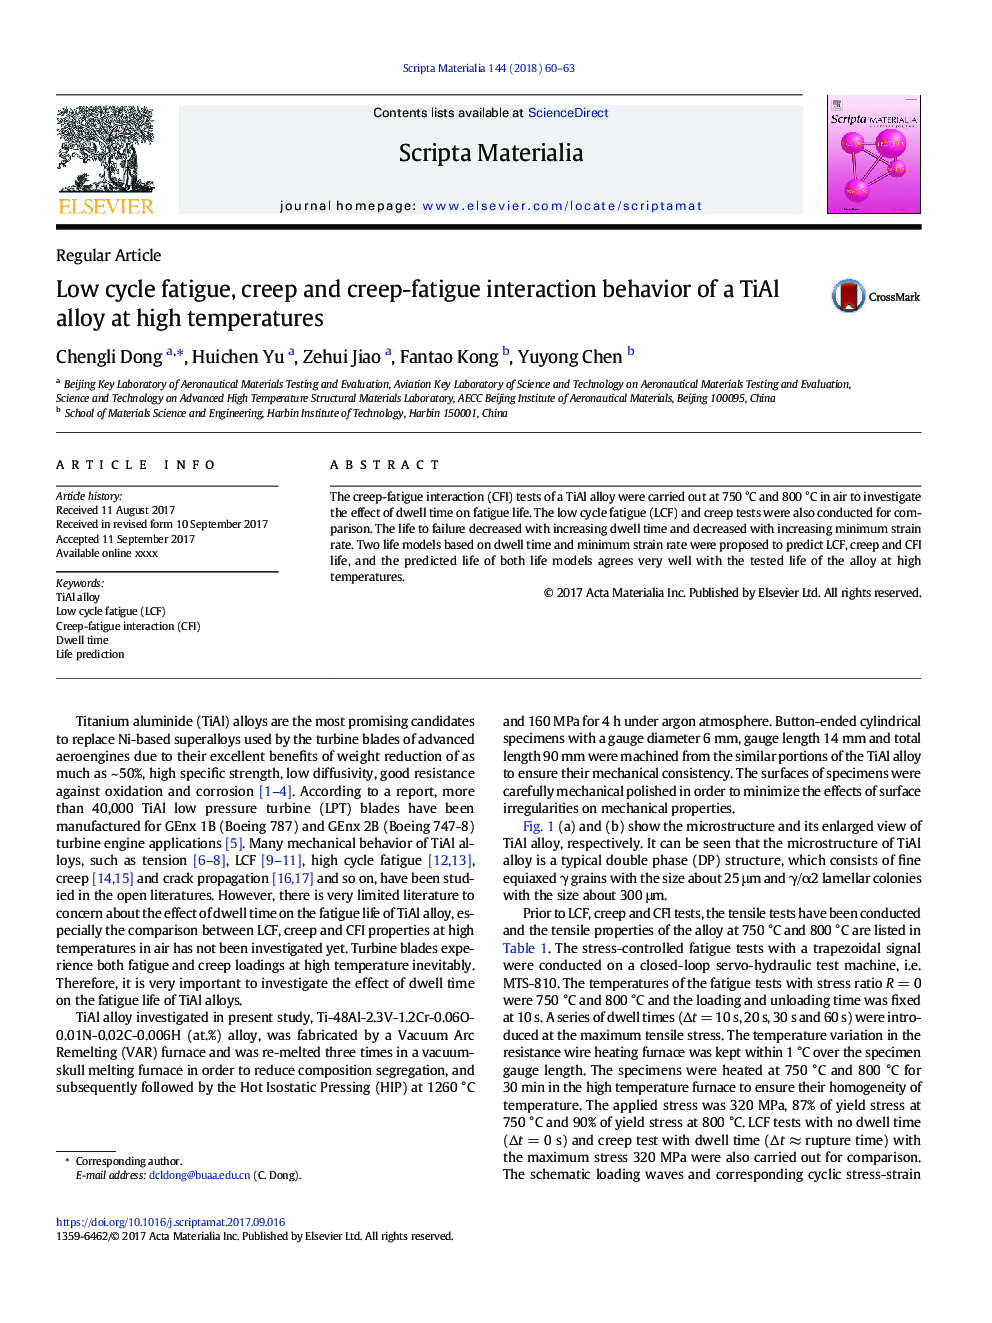 Low cycle fatigue, creep and creep-fatigue interaction behavior of a TiAl alloy at high temperatures